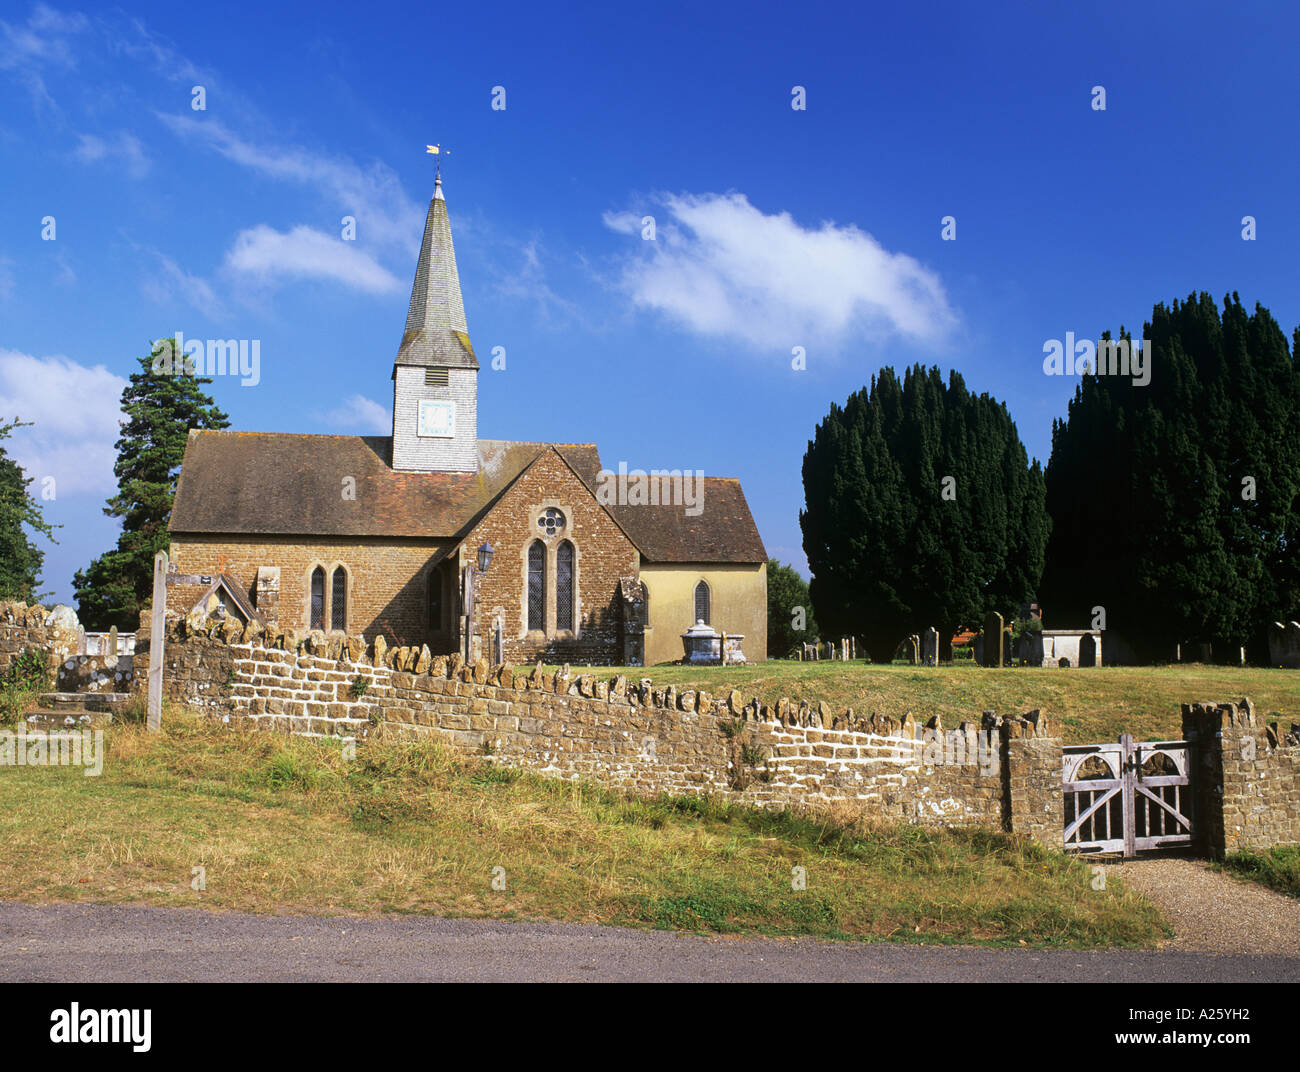 THURSLEY PARISH CHURCH of St Michael of all Angels on the Greensand Way long distance footpath. Thursley Surrey England UK Stock Photo